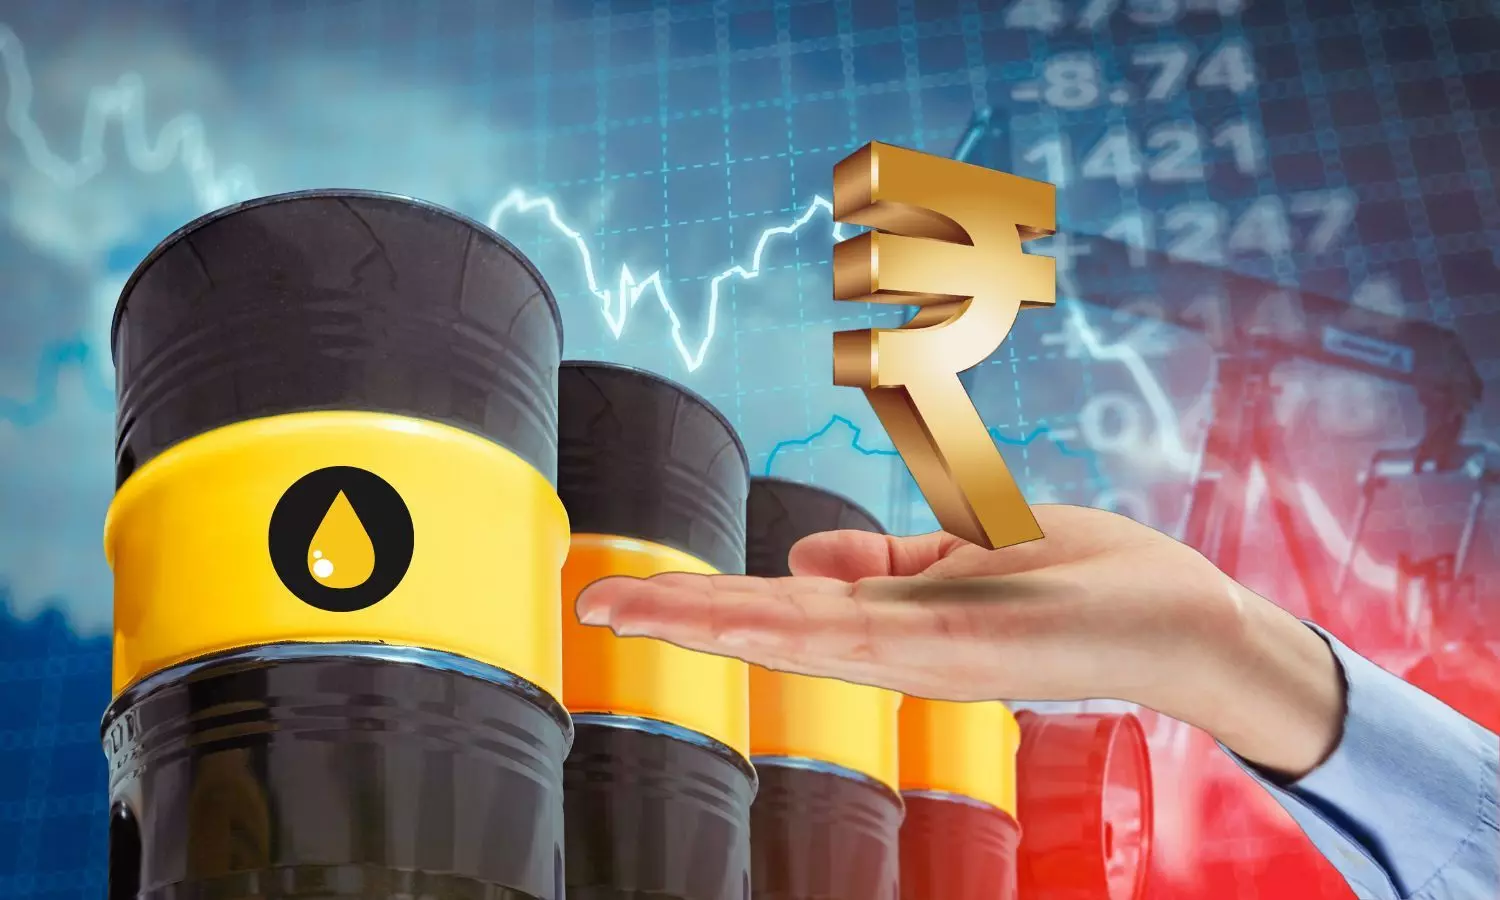 Crude oil, Rupee symbol